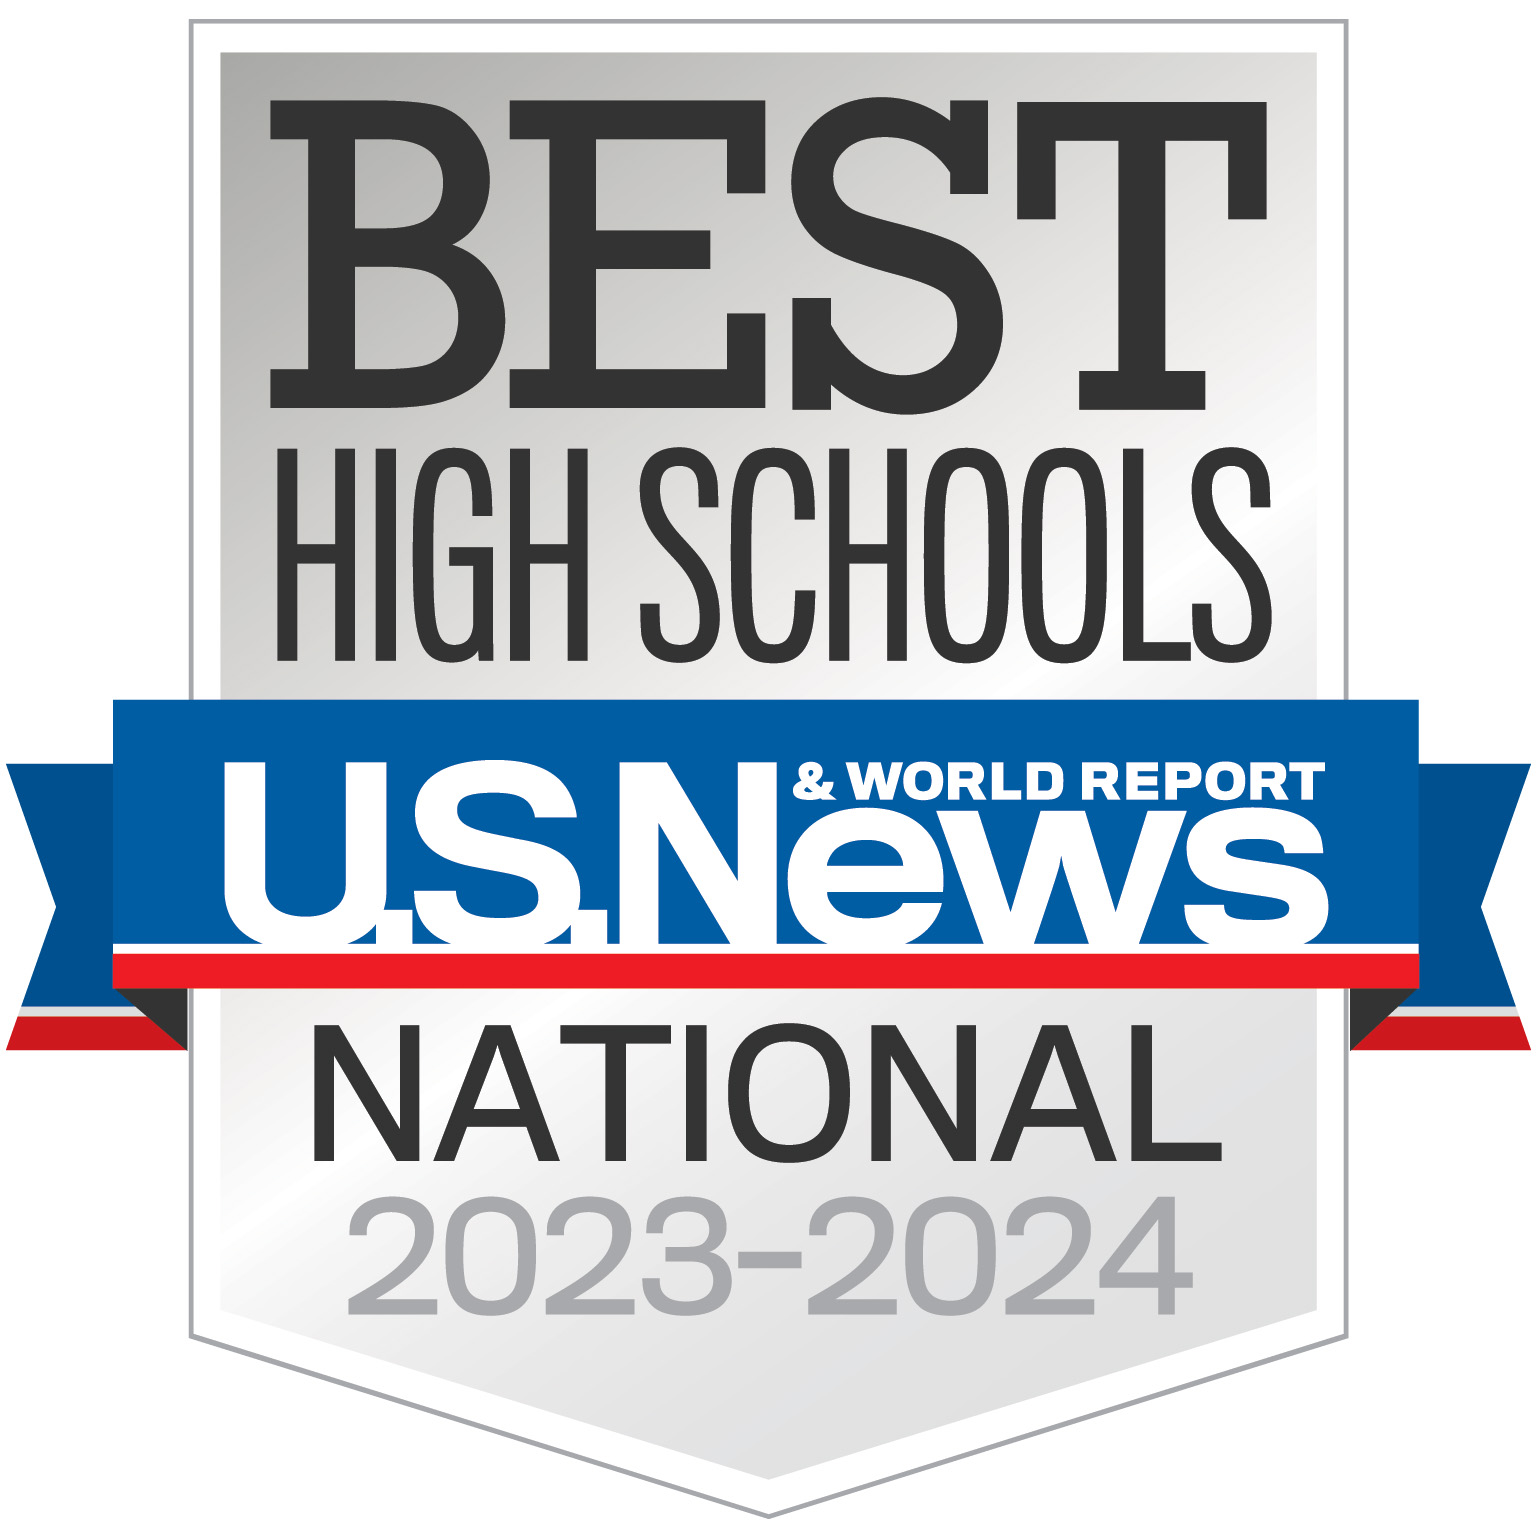 Best High School U.S. News National 2023-2024